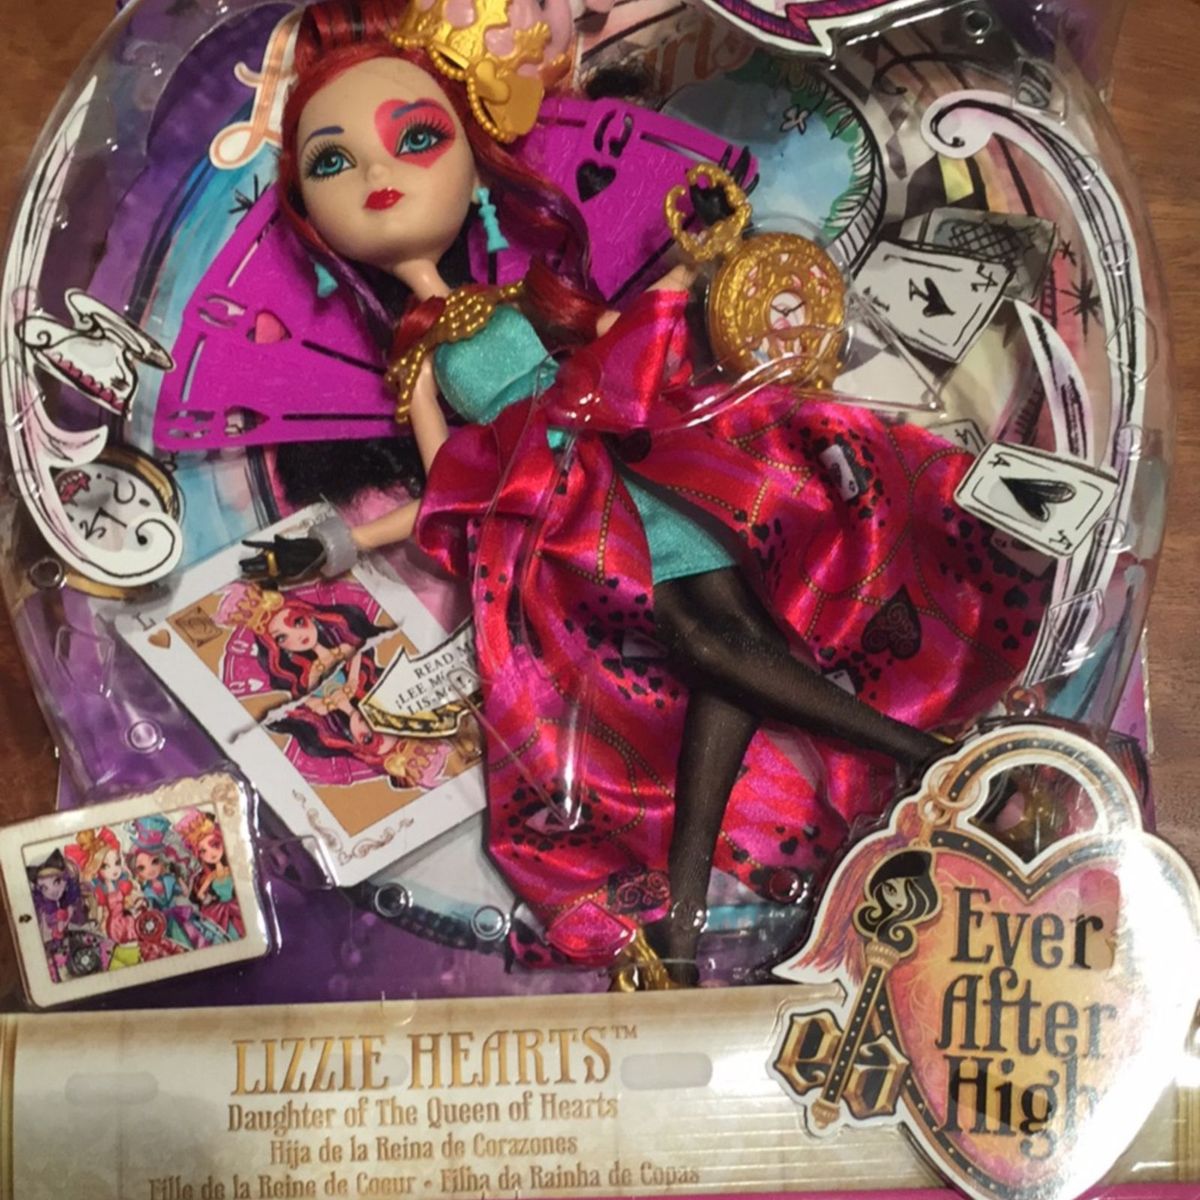 Boneca Lizzie Hearts - Ever After High Original 